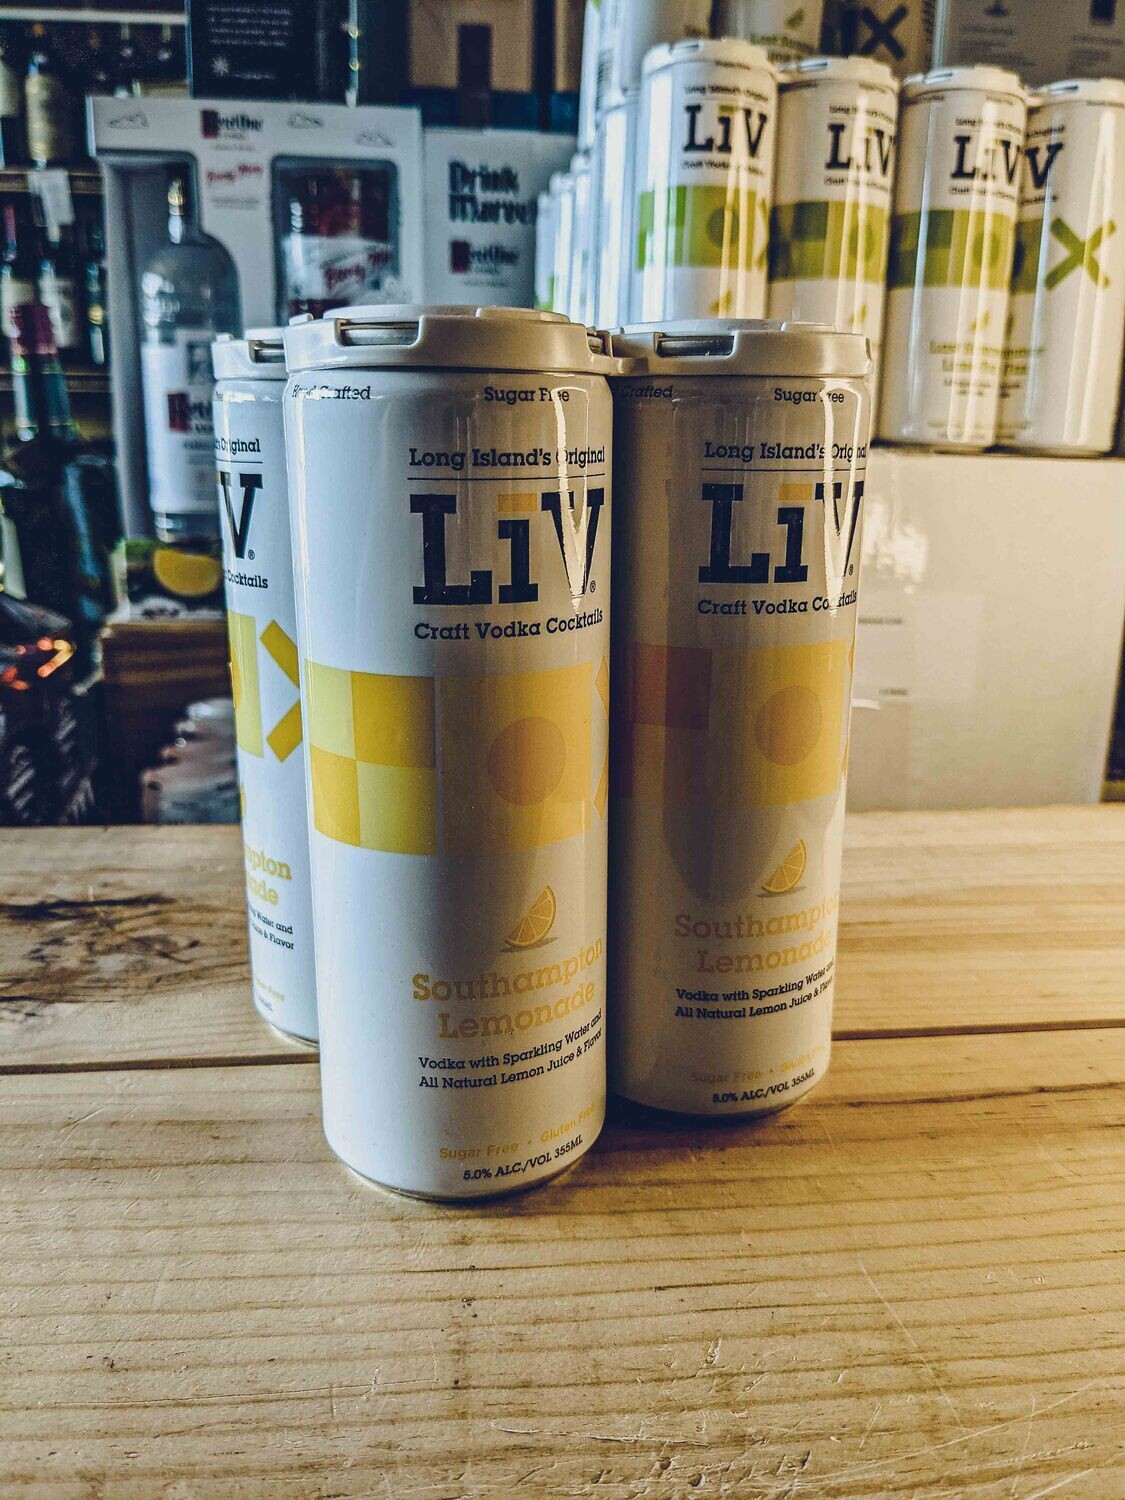 LIV Southampton Lemonade 4 Pack